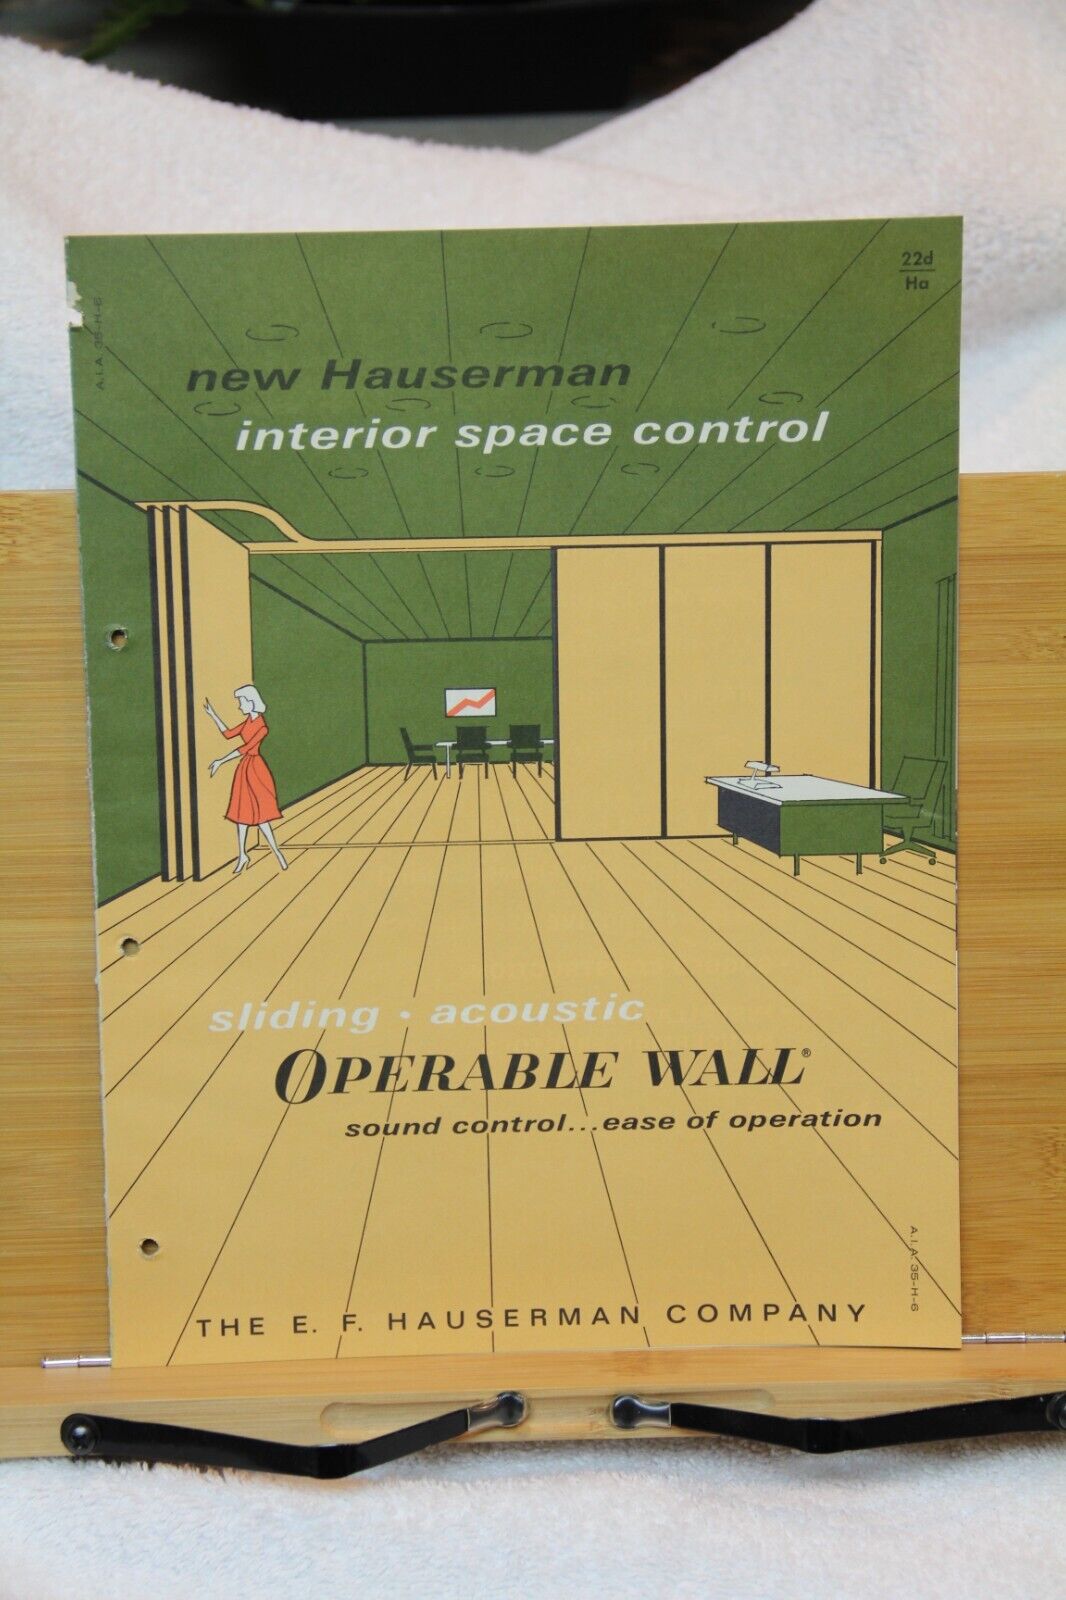 Hauserman Co Operable Wall Sliding Acoustic Brochure 1962 16pp Vintage Cleveland